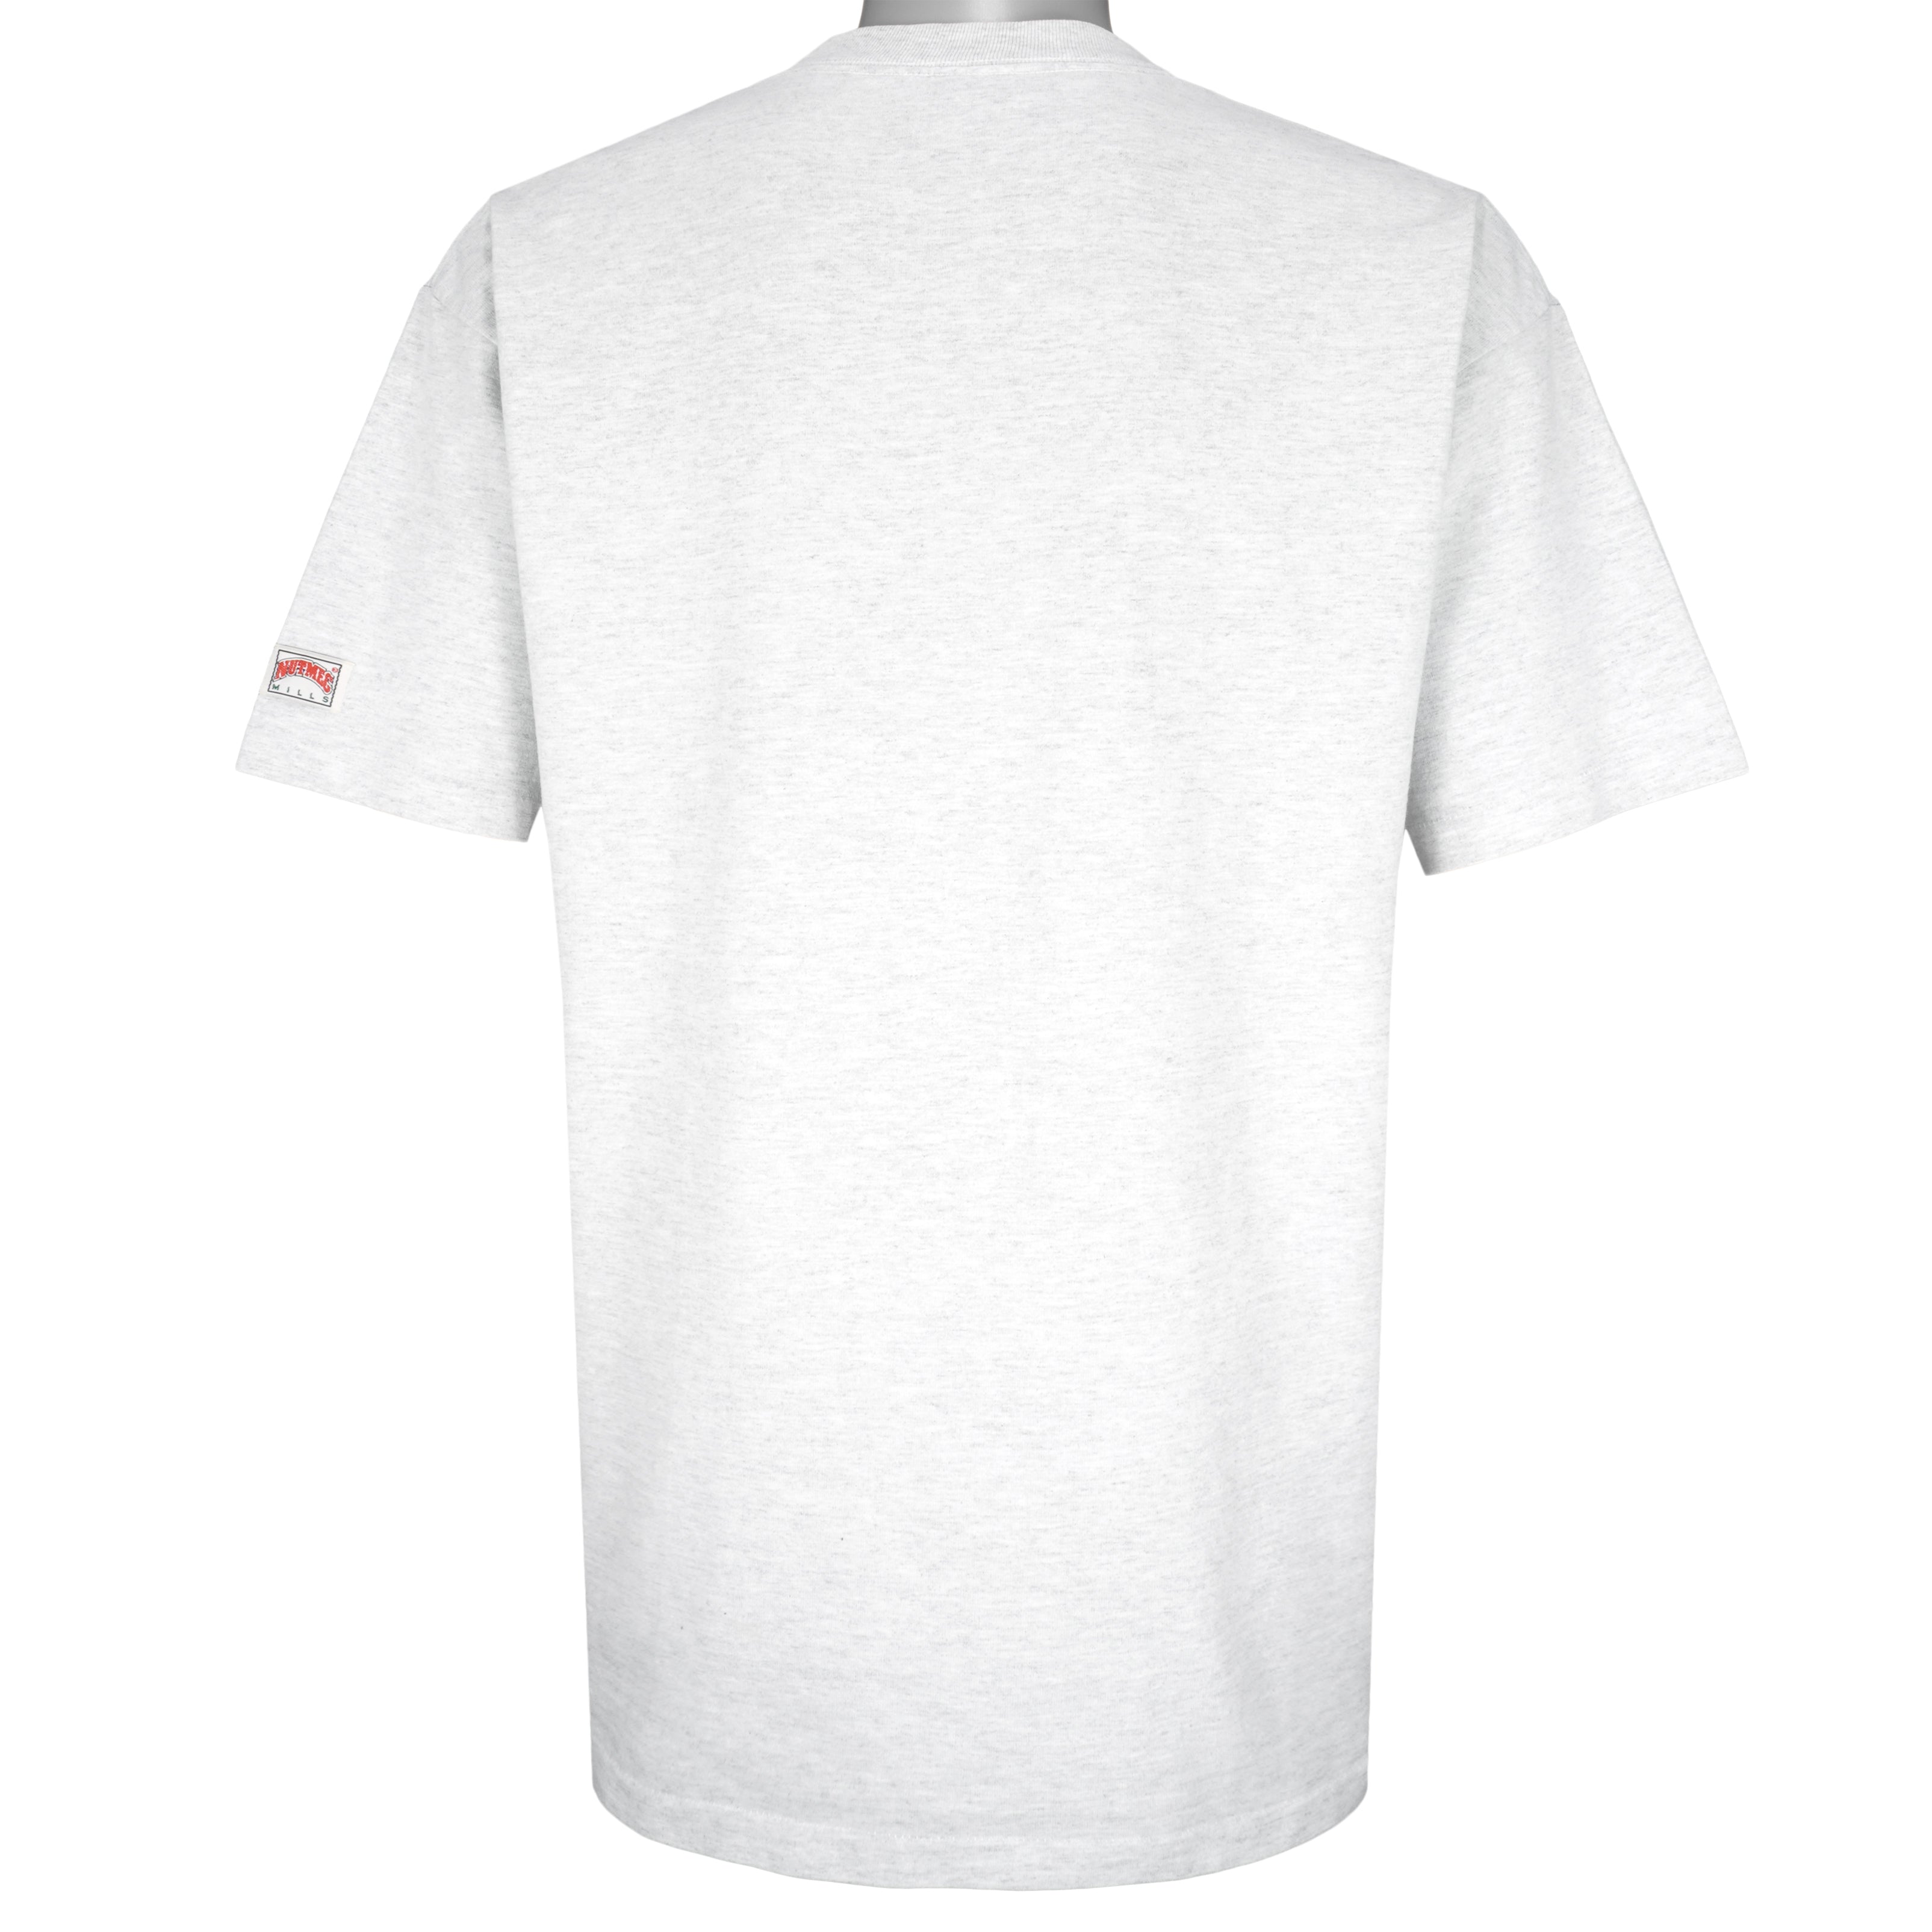 Genuine Merchandise, Shirts, Vintage Pinstripe Red Sox Jersey